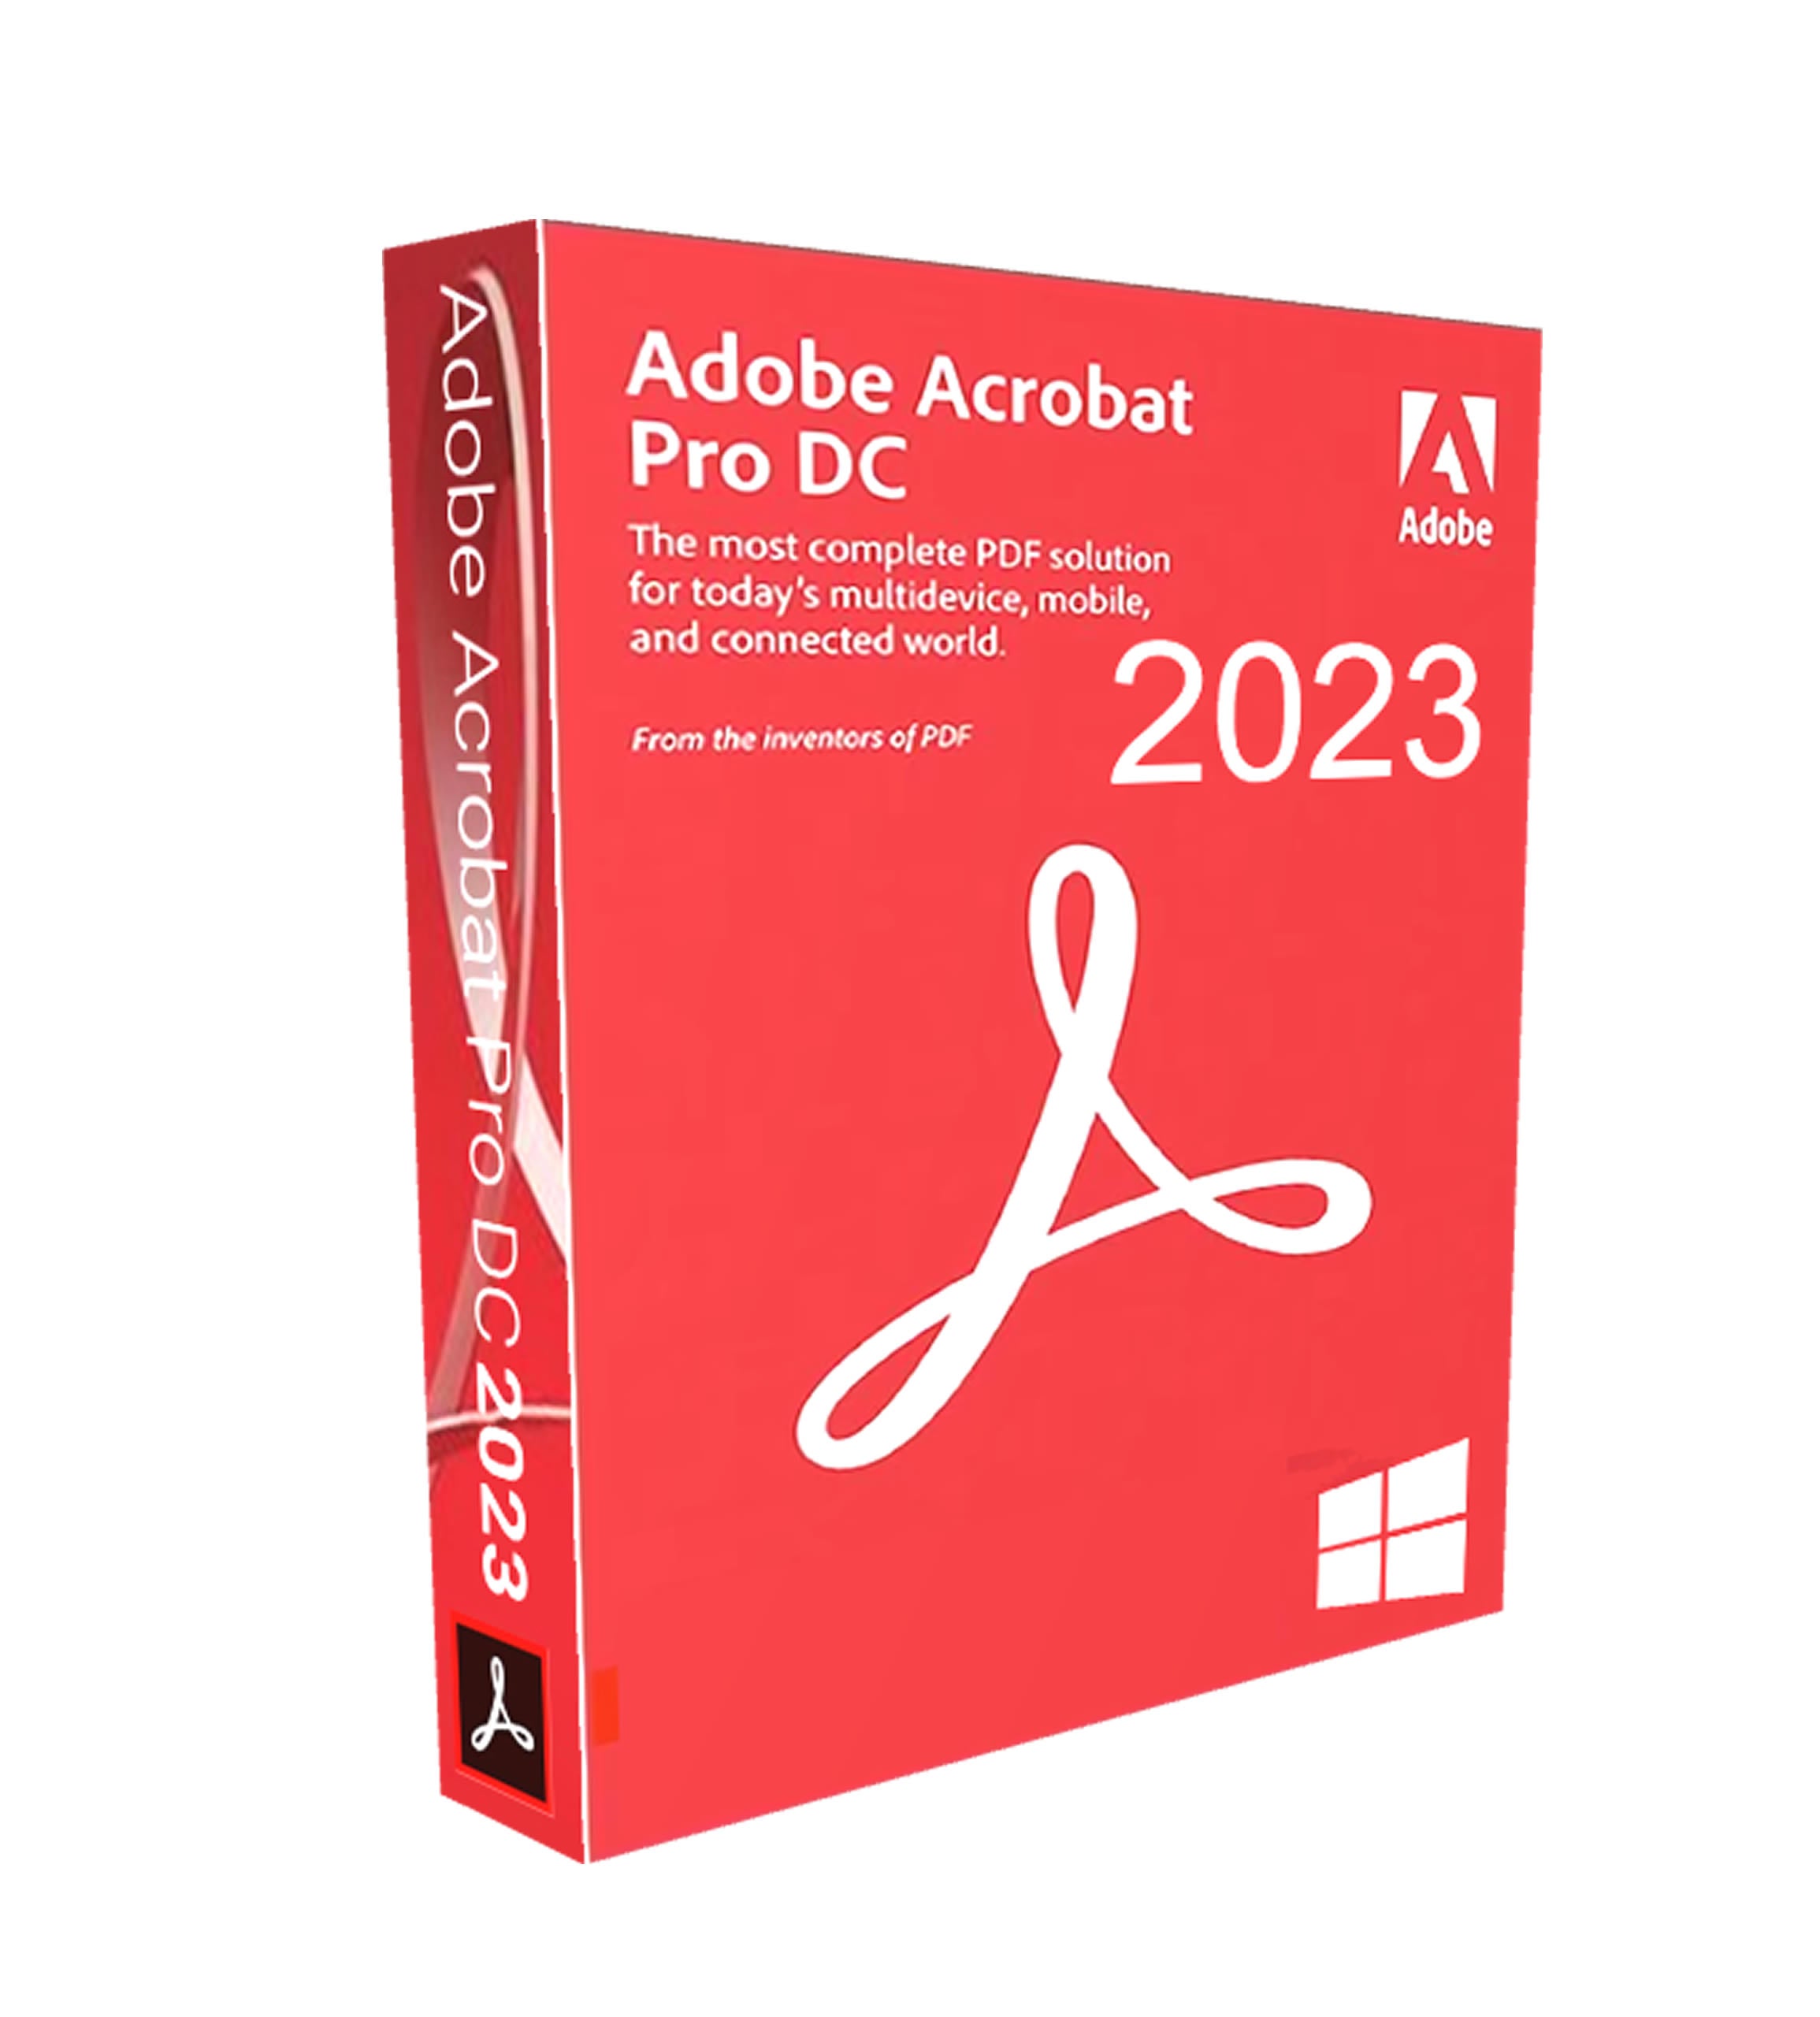 Adobe Acrobat Pro DC 2023 | Full Version | Genuine Lifetime License | AUS STOCK - INFINITE-ITECH